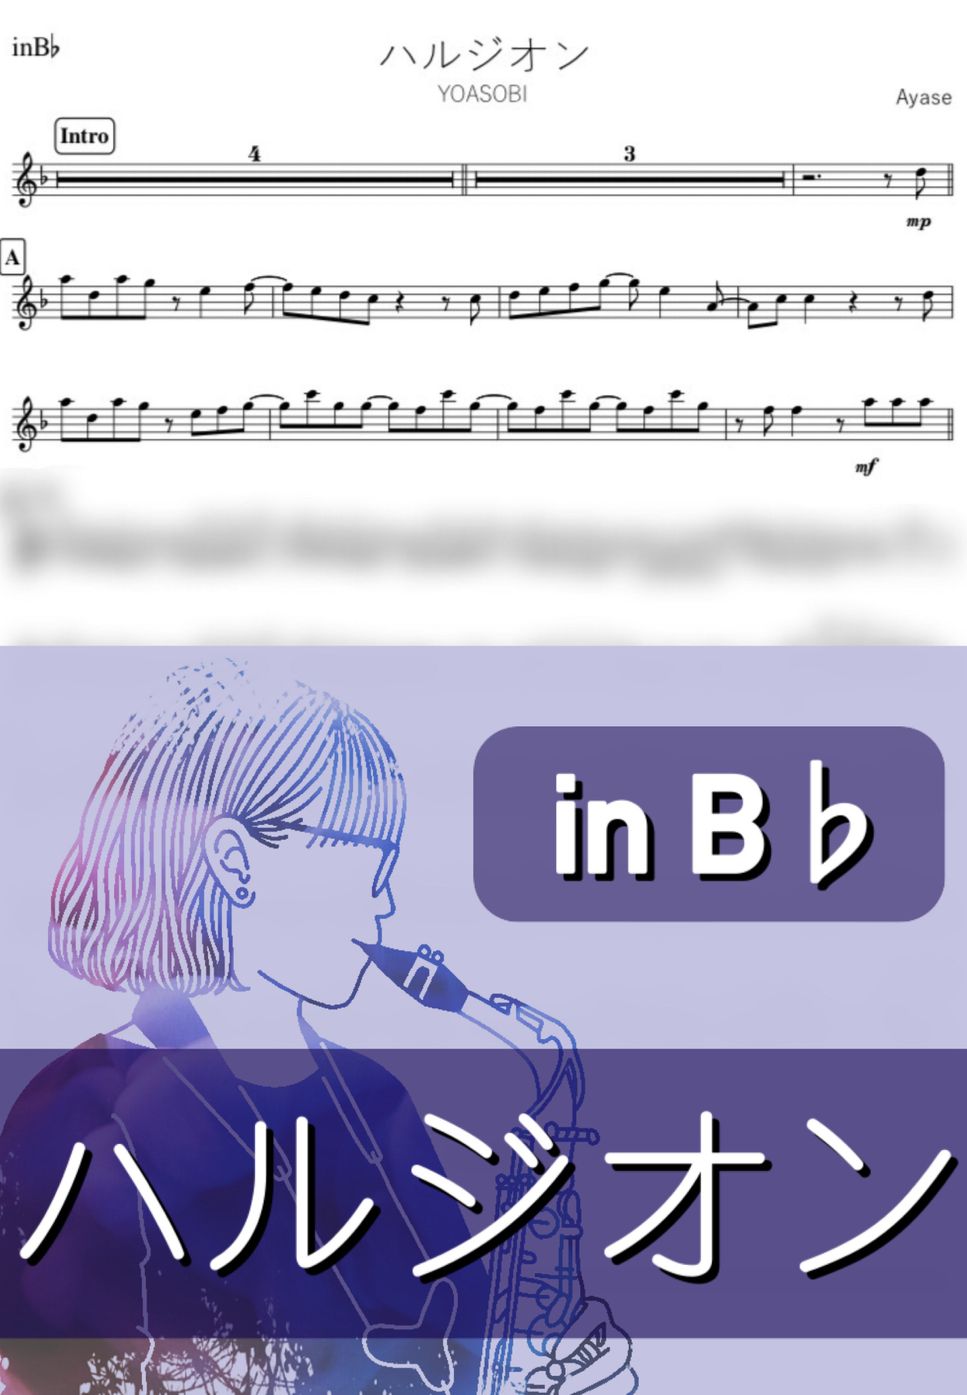 YOASOBI - ハルジオン (B♭) by kanamusic